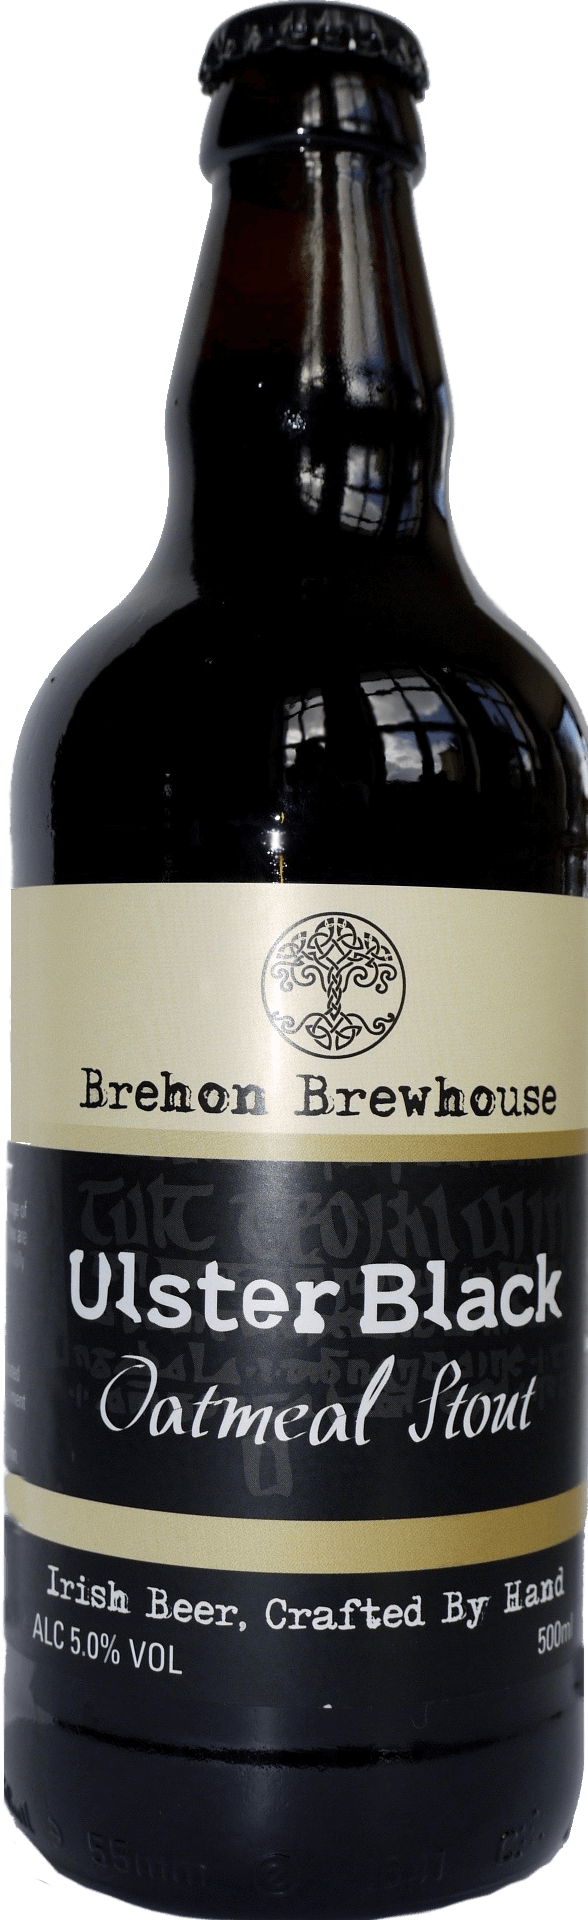 Produktbild von Brehon Brewhouse - Brehon Ulster Black Oatmeal Stout